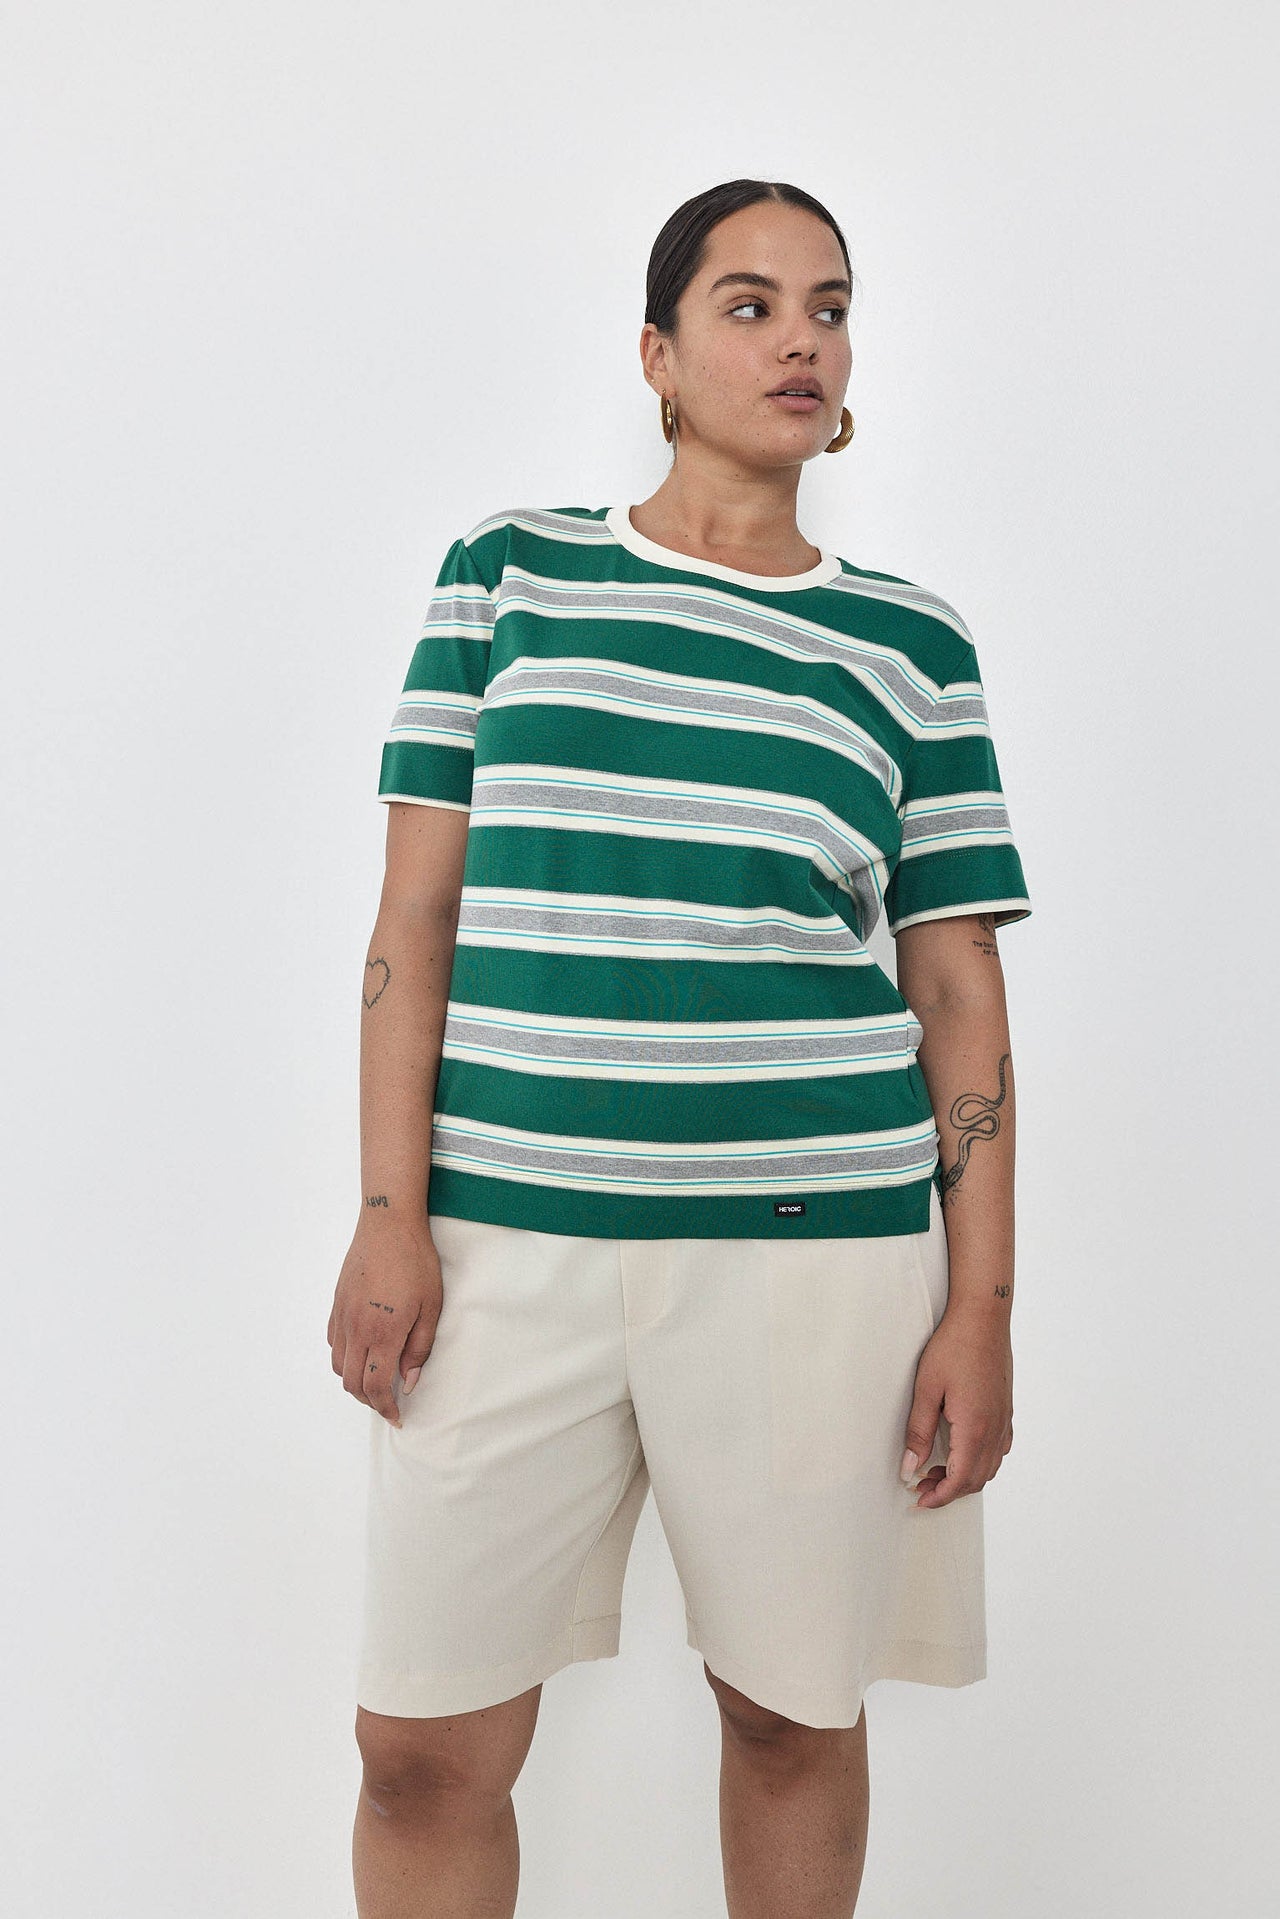 CHER T-Shirt S24 (2-3) - Green / Cream